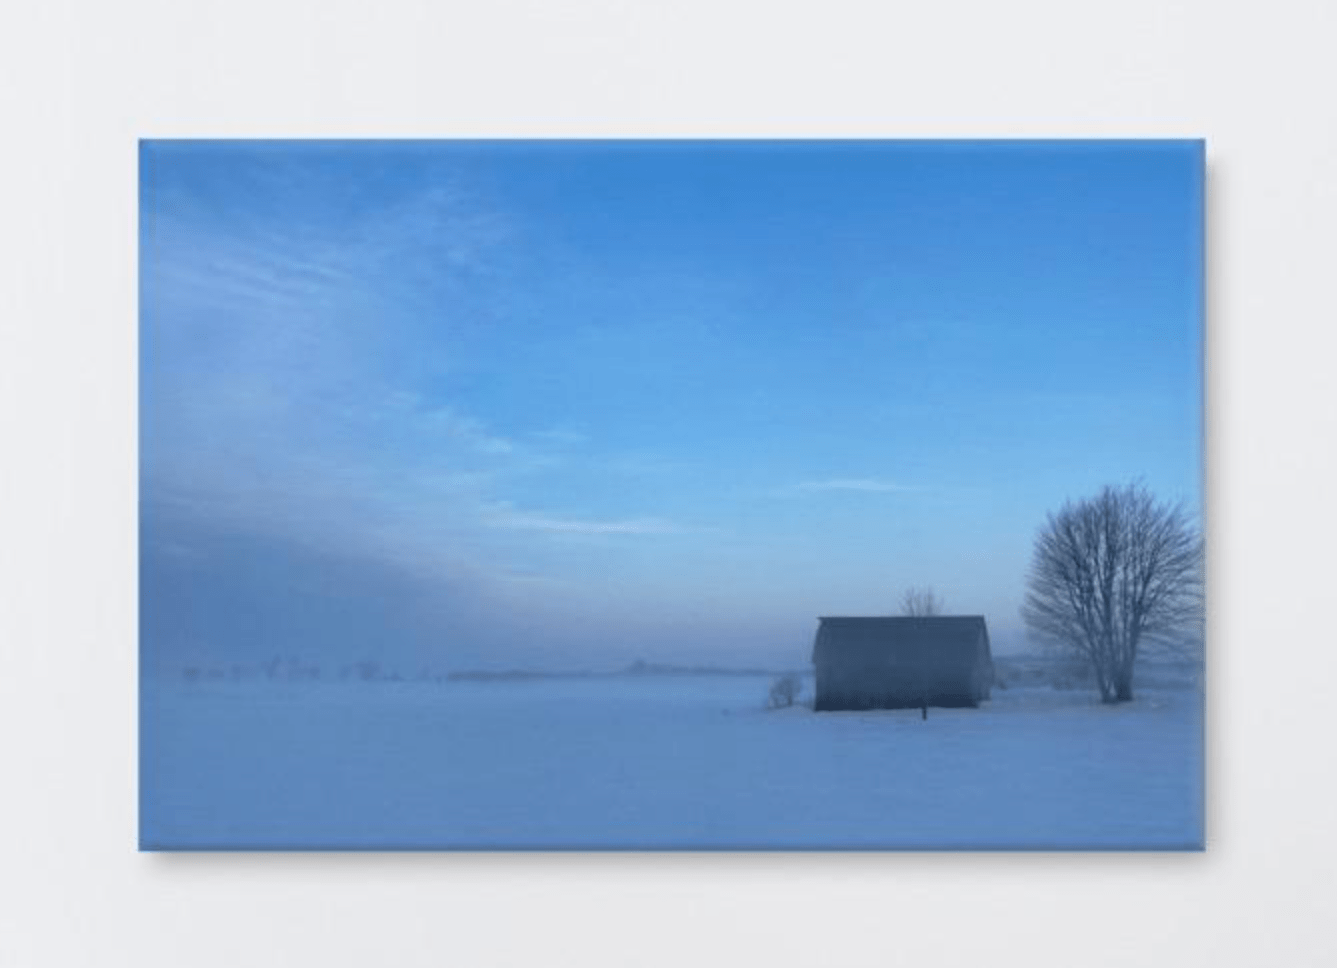 Old barn in snow field - the wheaten store